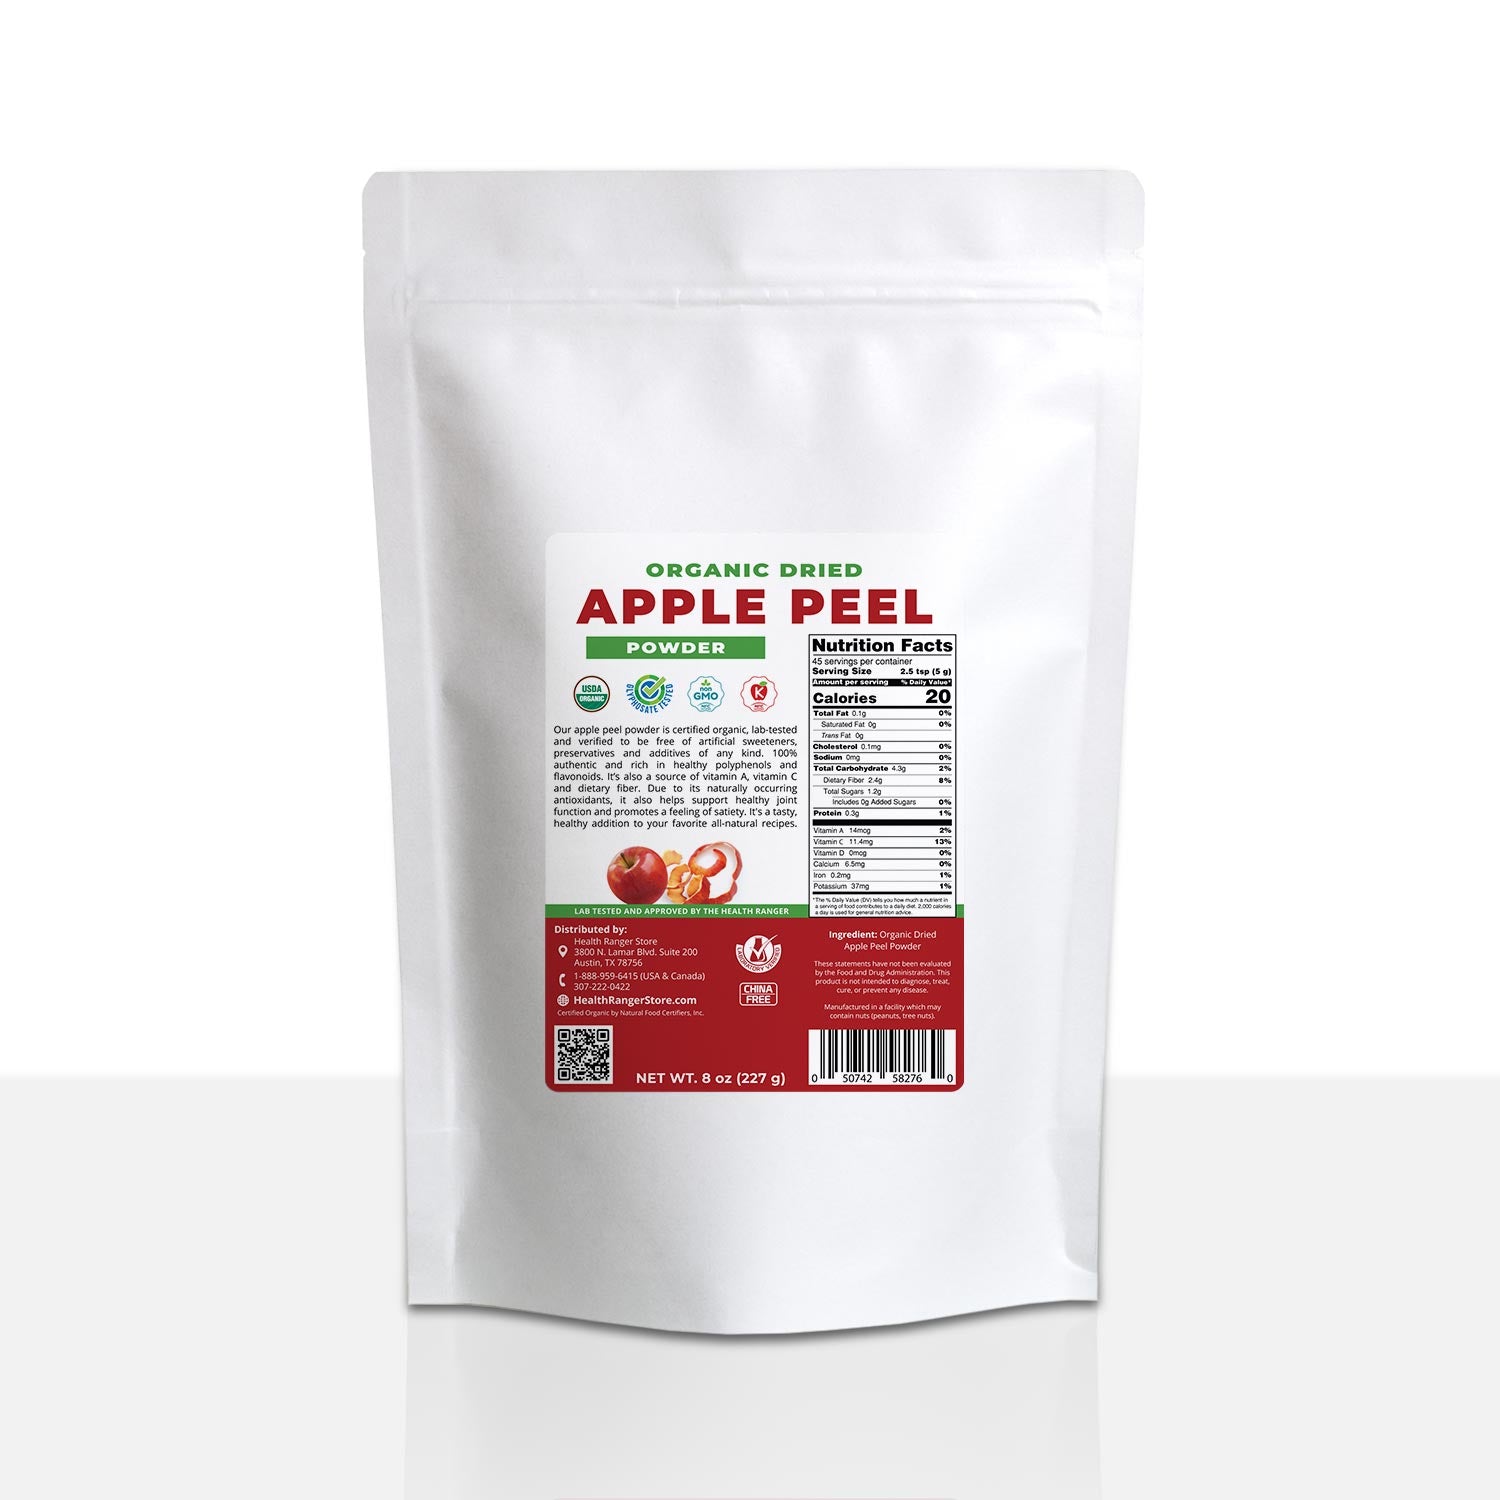 Organic Apple Peel Powder 8oz (227g) (3-Pack)